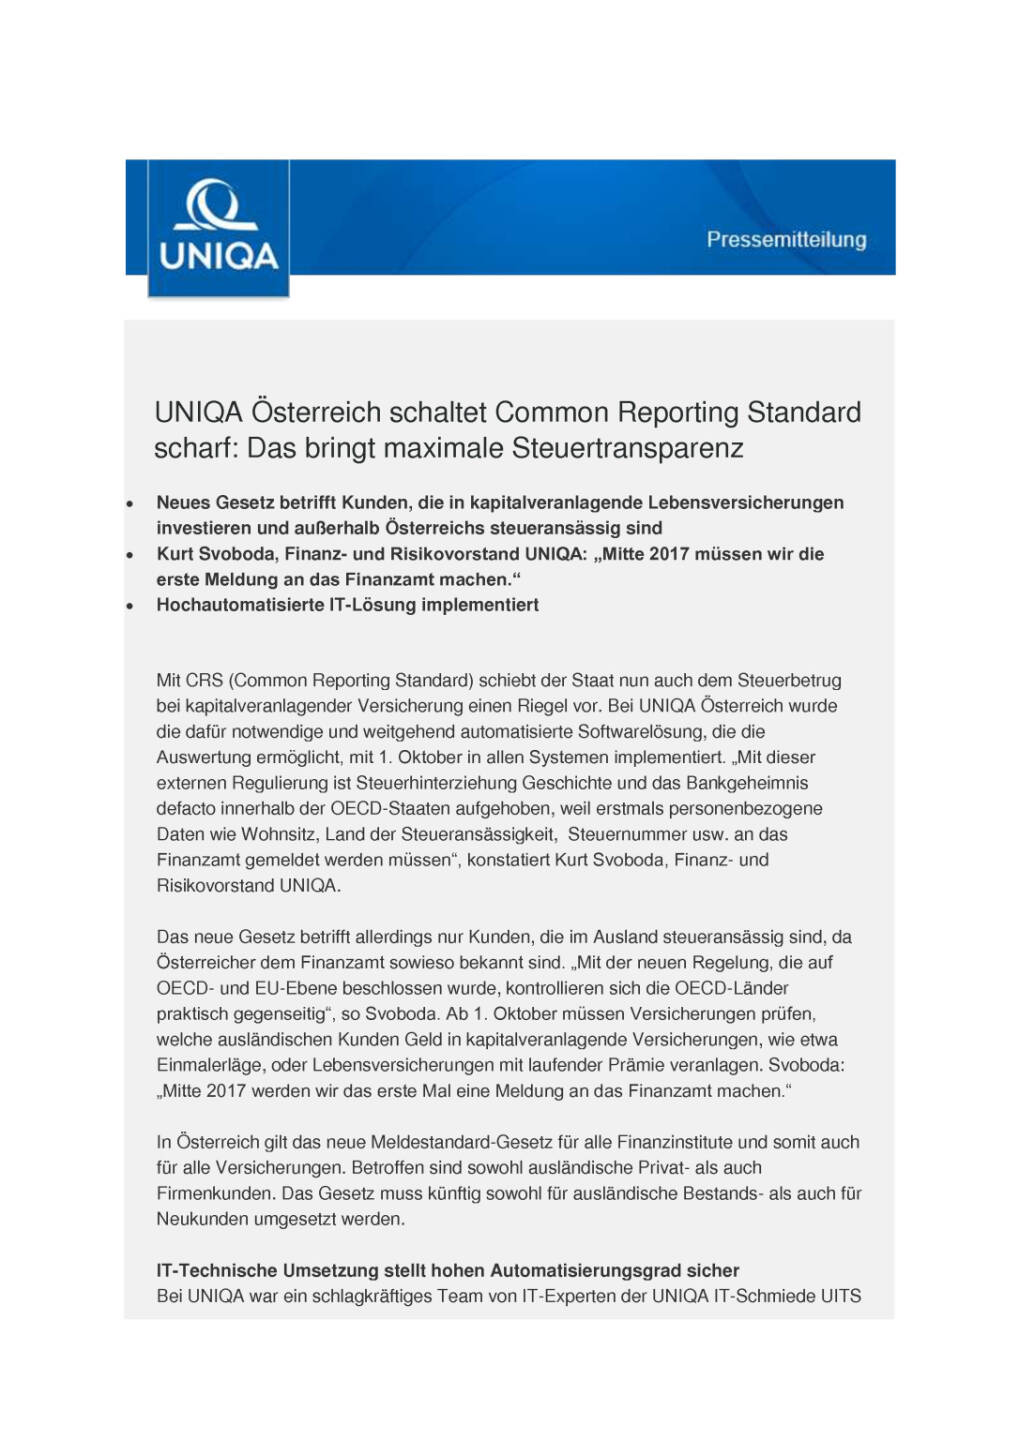 Uniqa: Common Reporting Standard, Seite 1/3, komplettes Dokument unter http://boerse-social.com/static/uploads/file_1845_uniqa_common_reporting_standard.pdf